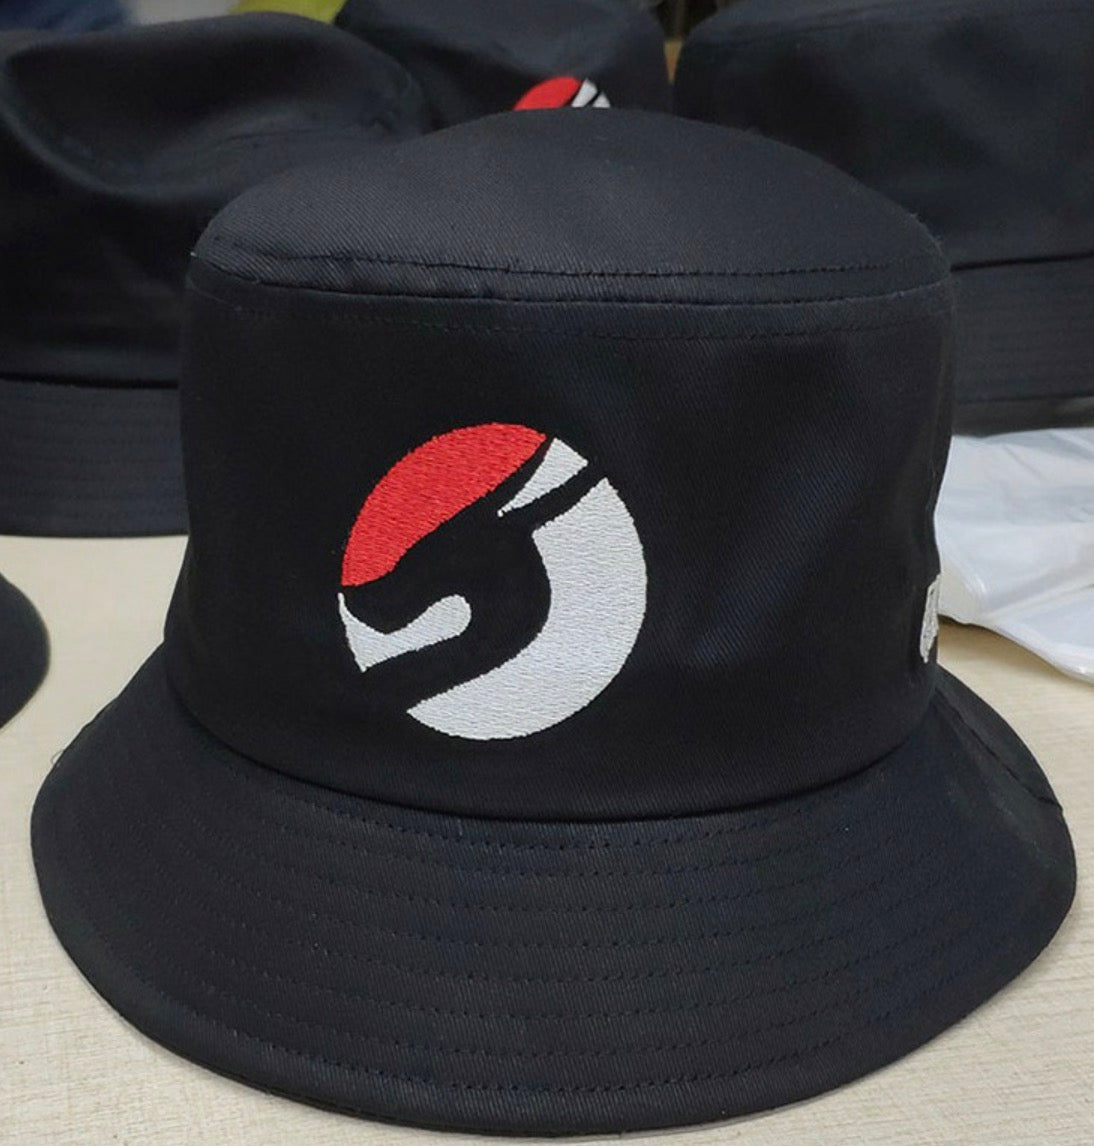 Custom_Printed_Embroidery_Logo_Bucket_Hats_No_Minimum